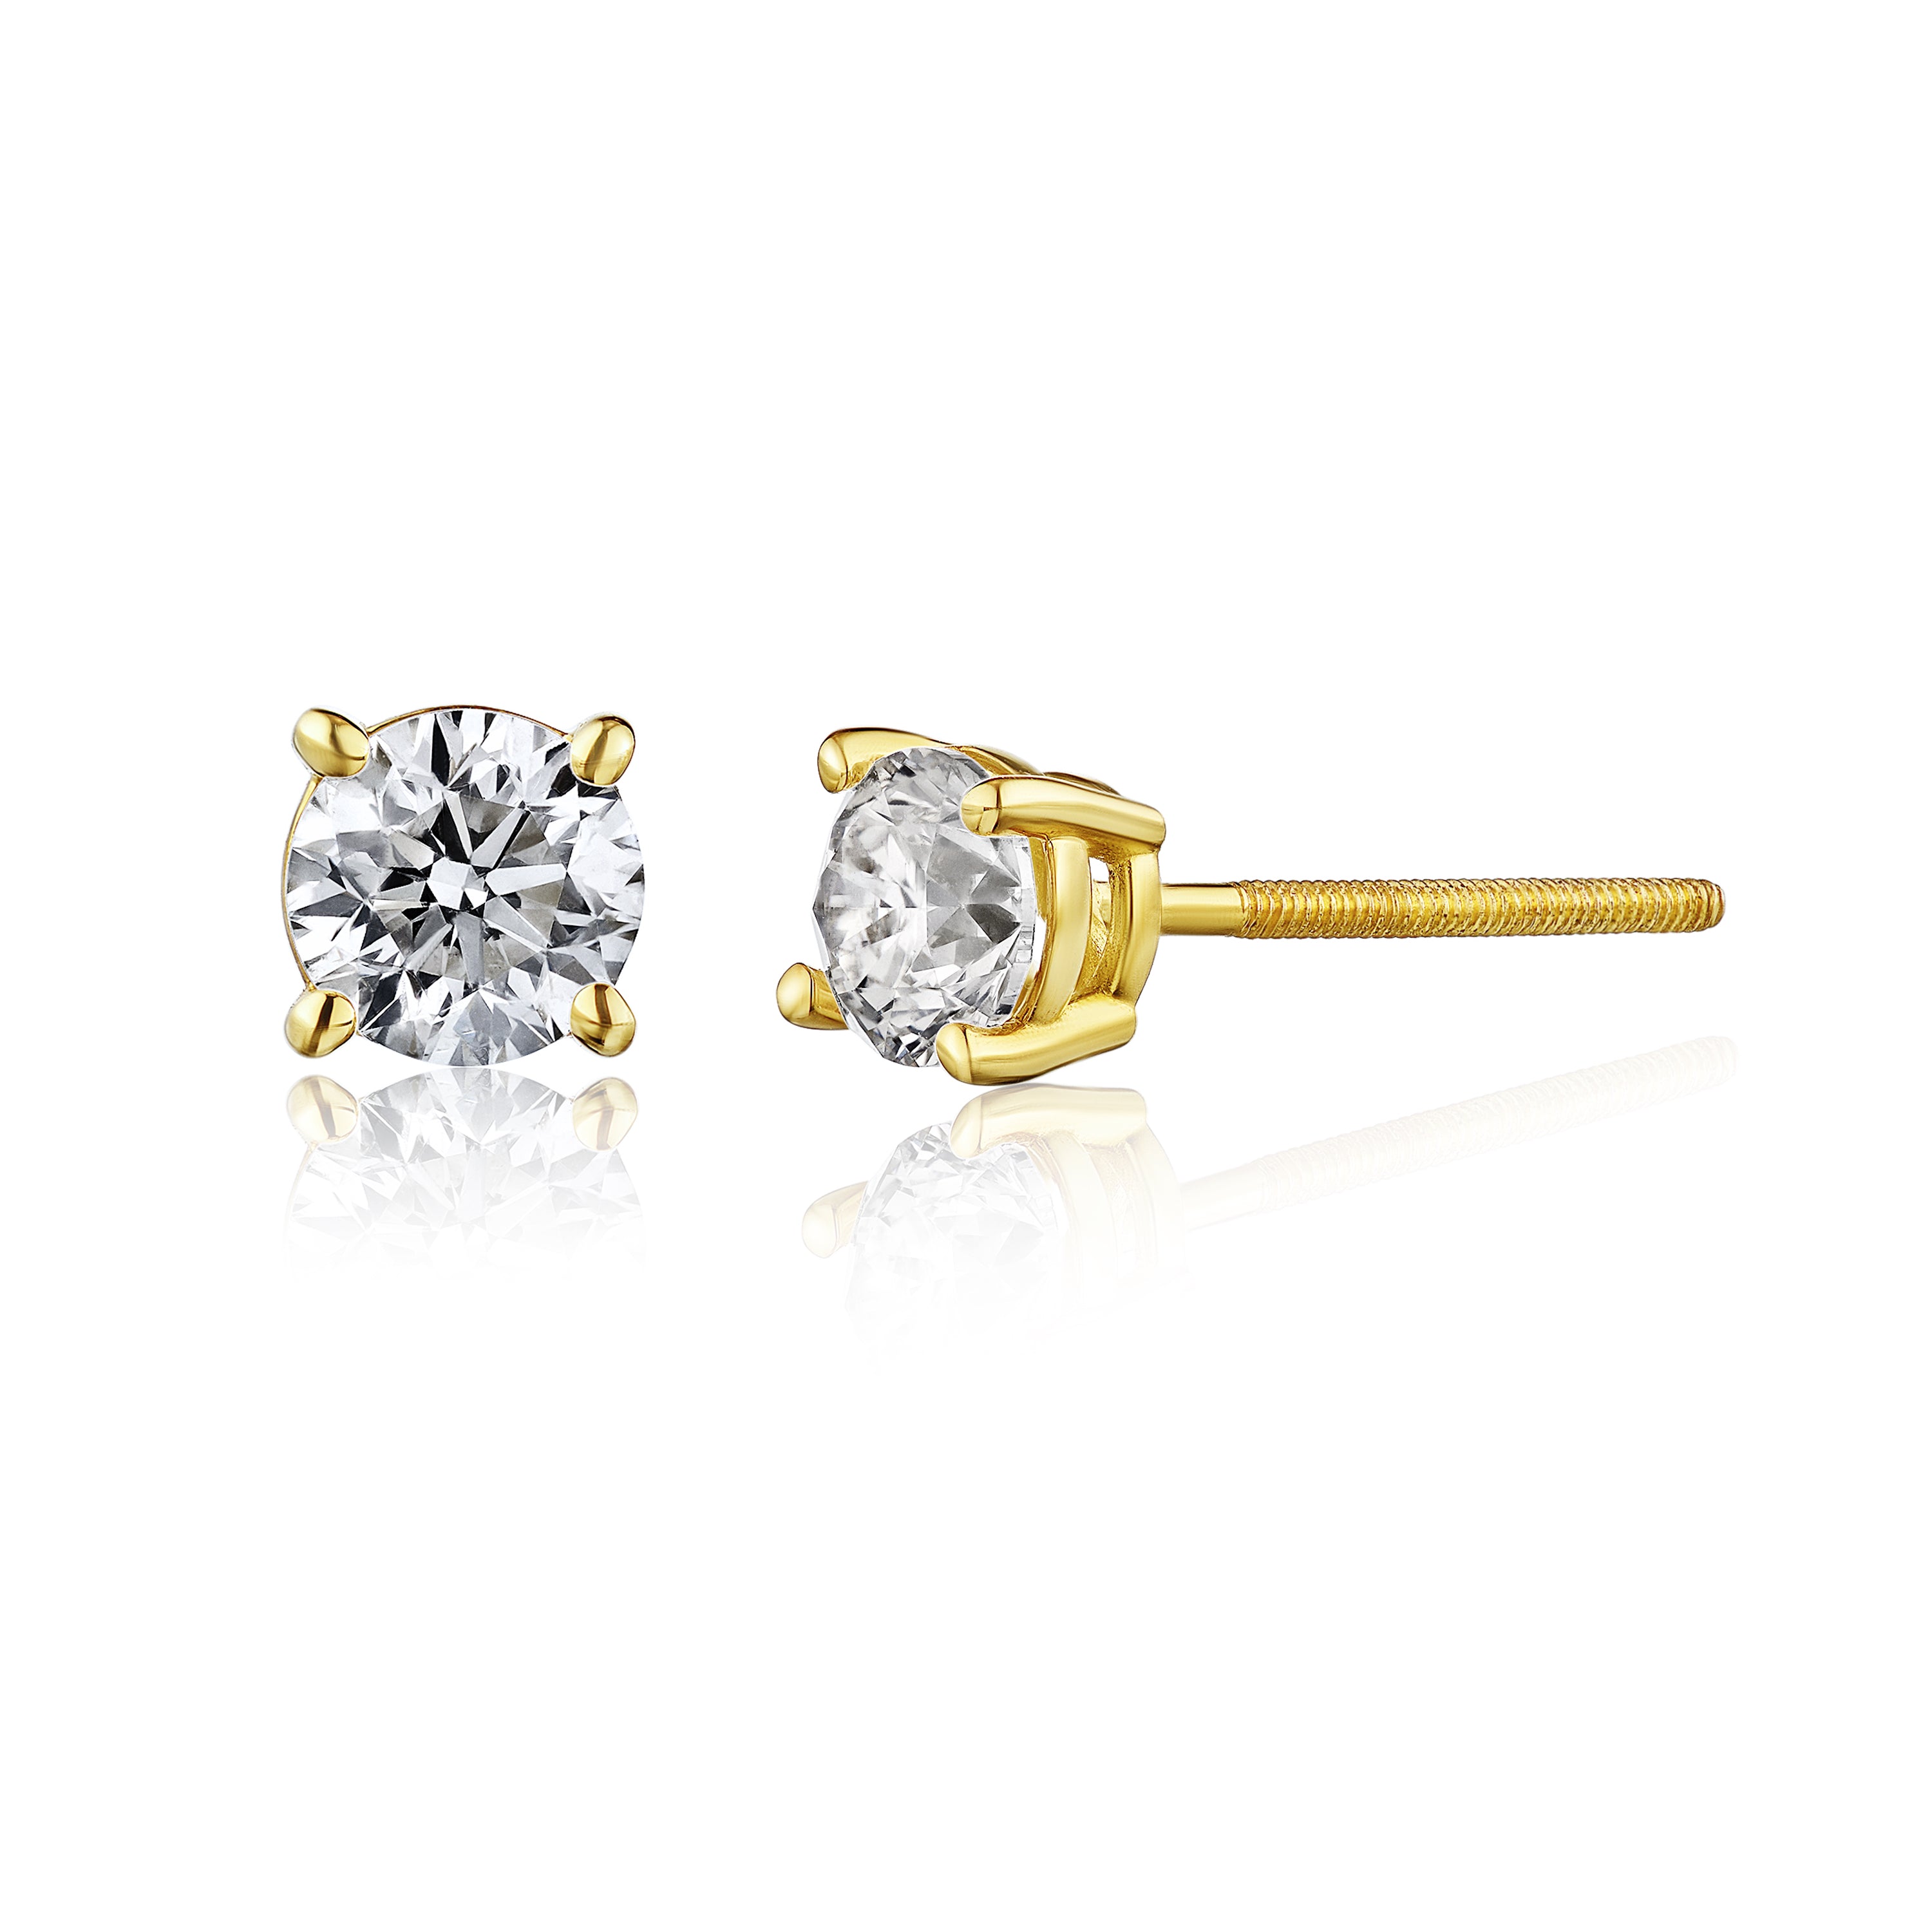 Yellow Gold Diamond Stud Earrings - The Diamond Channel